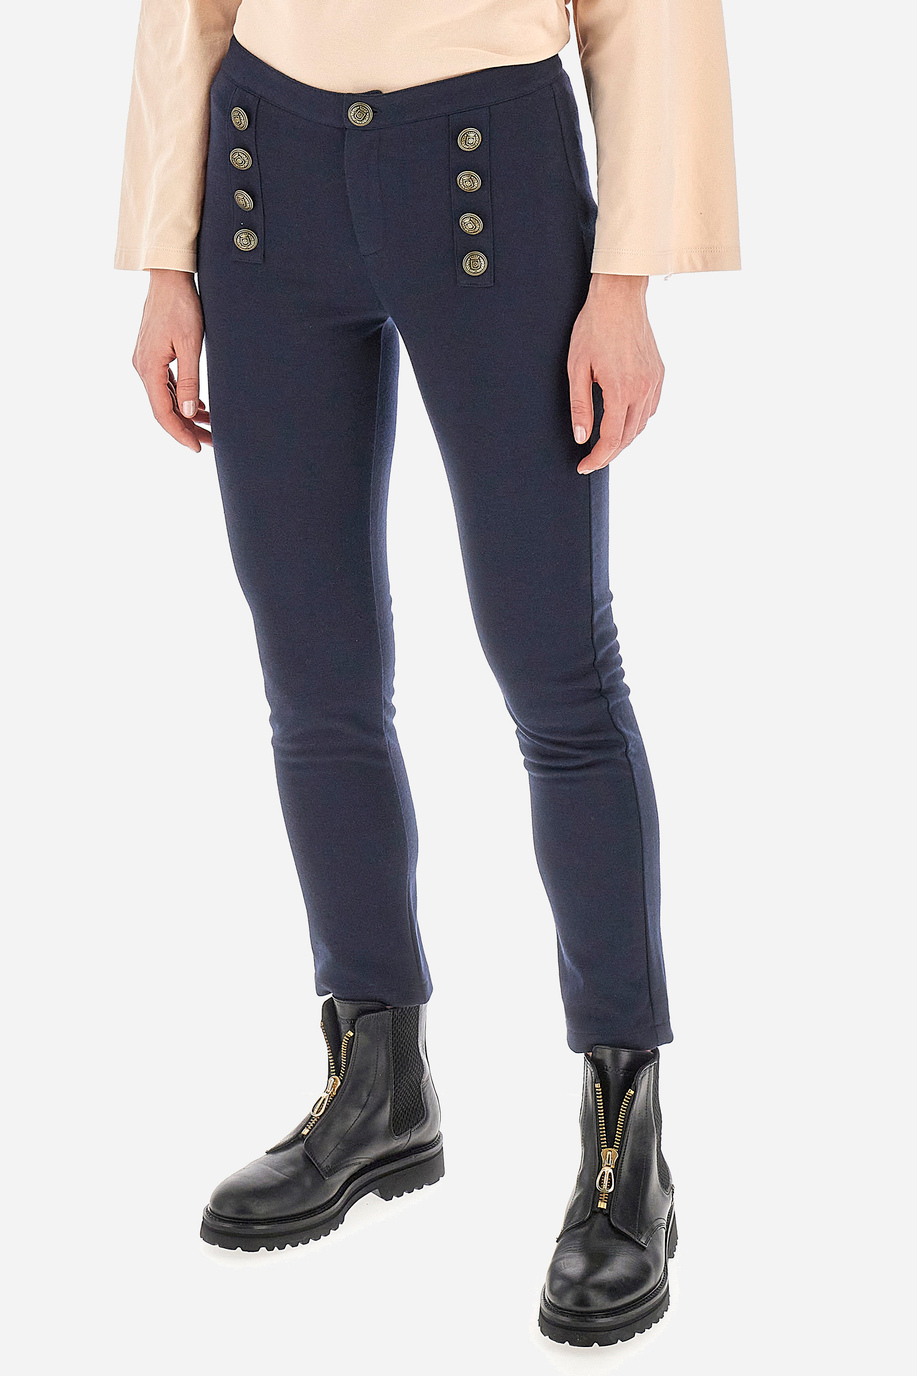 Pantaloni donna regular fit - Winter - I nostri preferiti per lei | La Martina - Official Online Shop